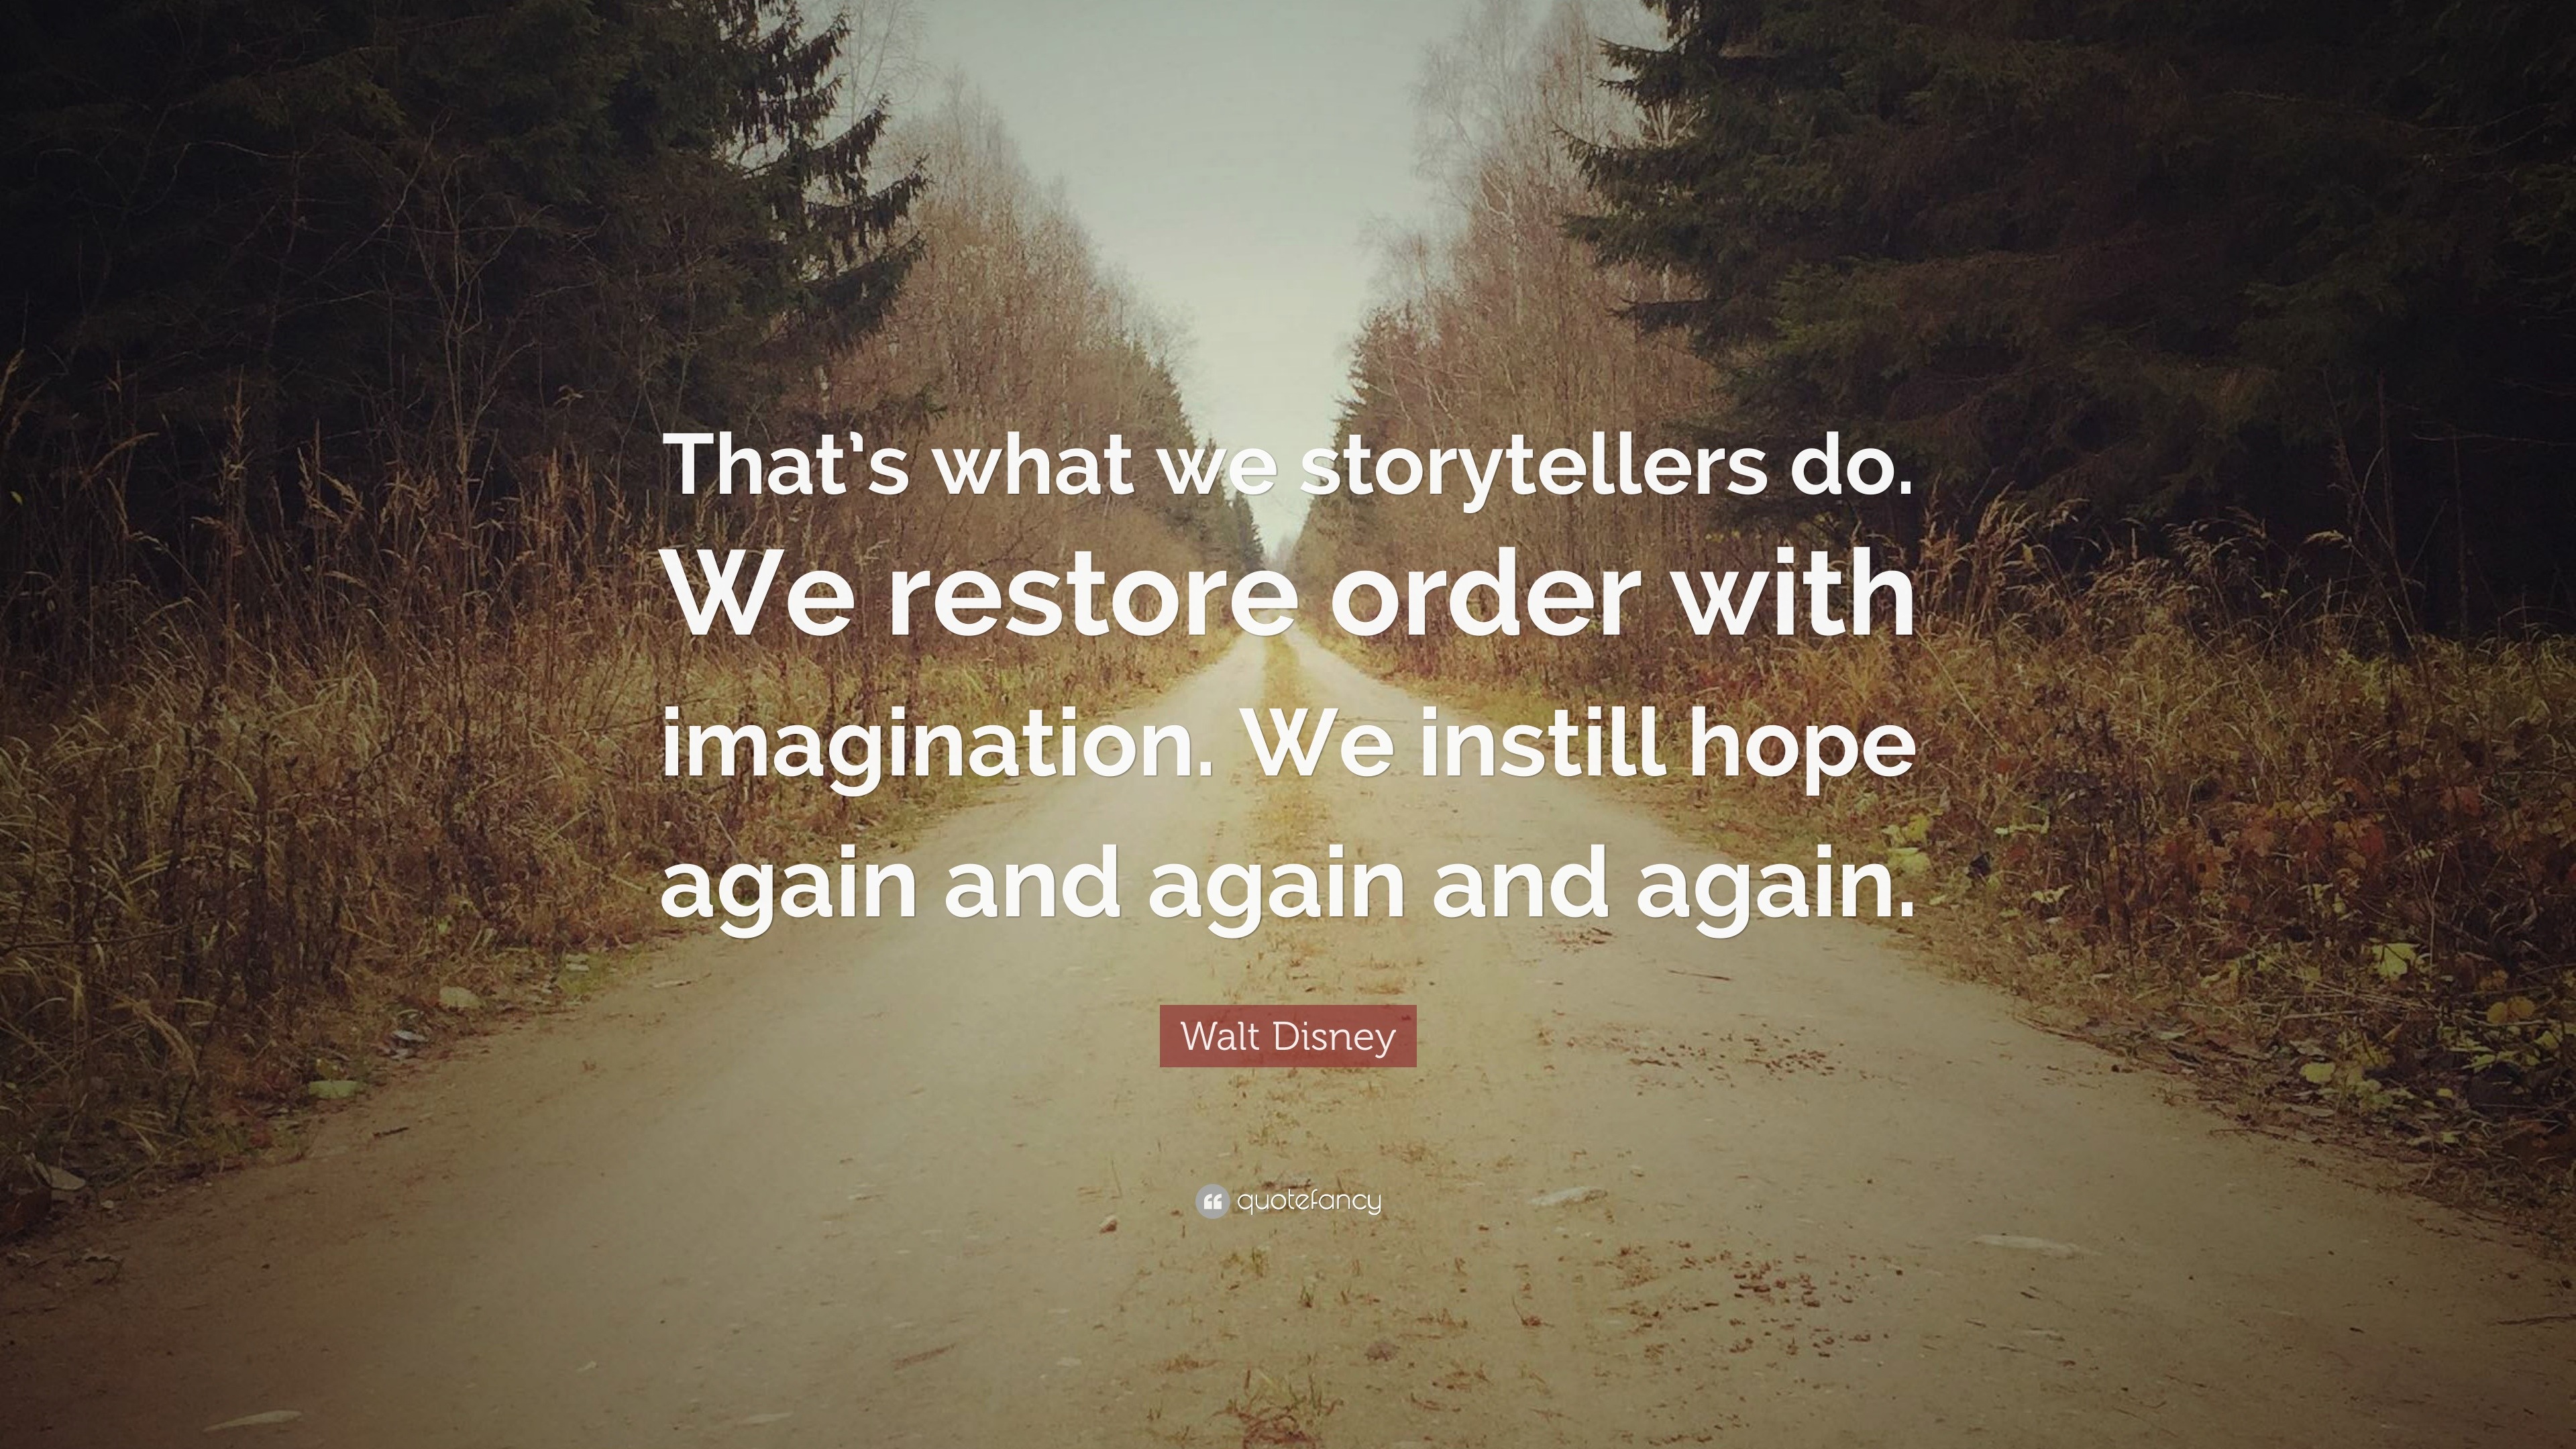 Walt Disney Quote: “That’s what we storytellers do. We restore order